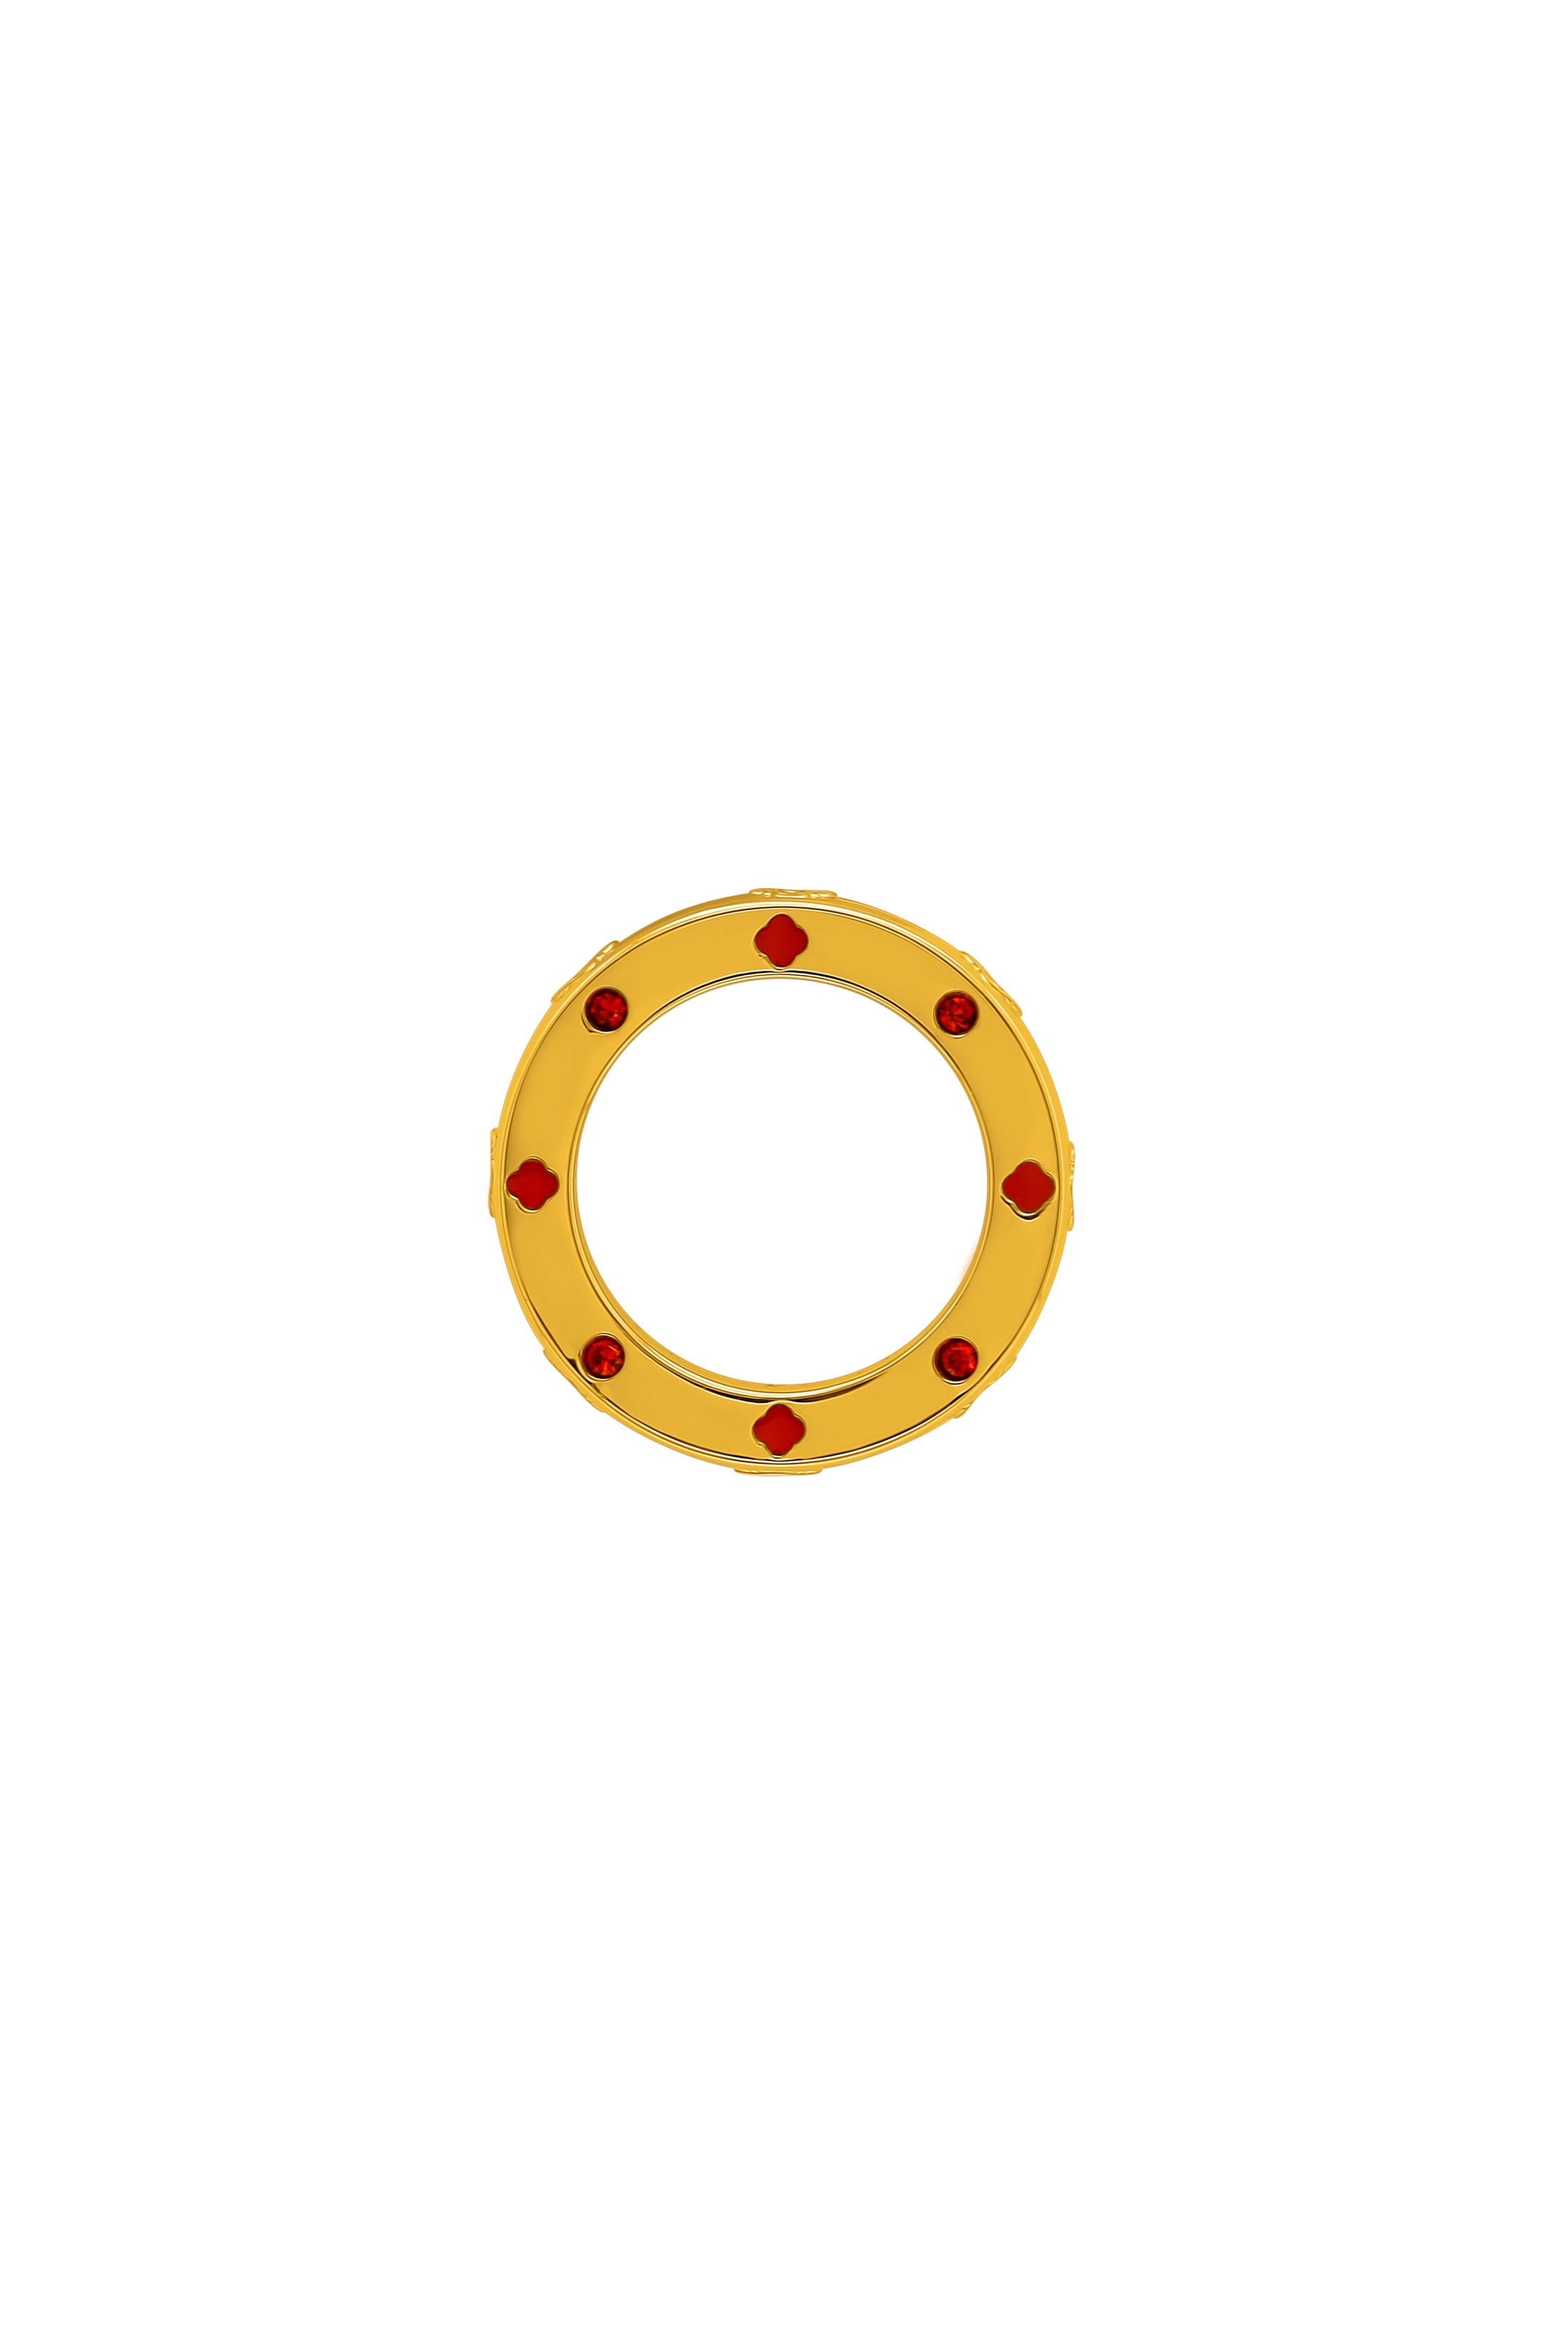 Inħobbok Red Carnelian Ring Pendant